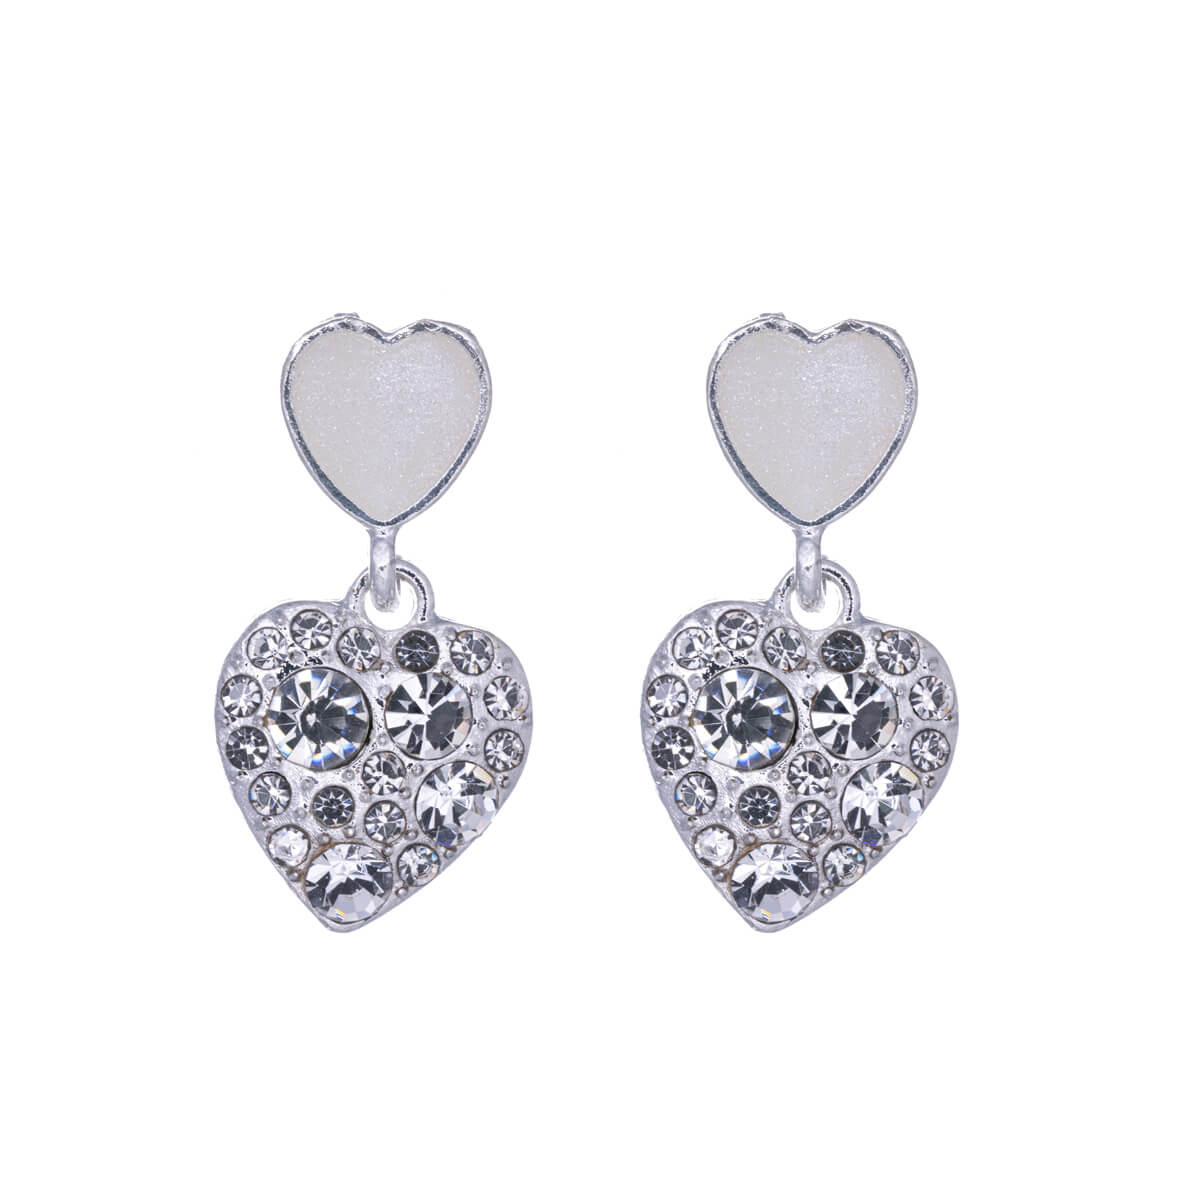 Sparkling heart earrings